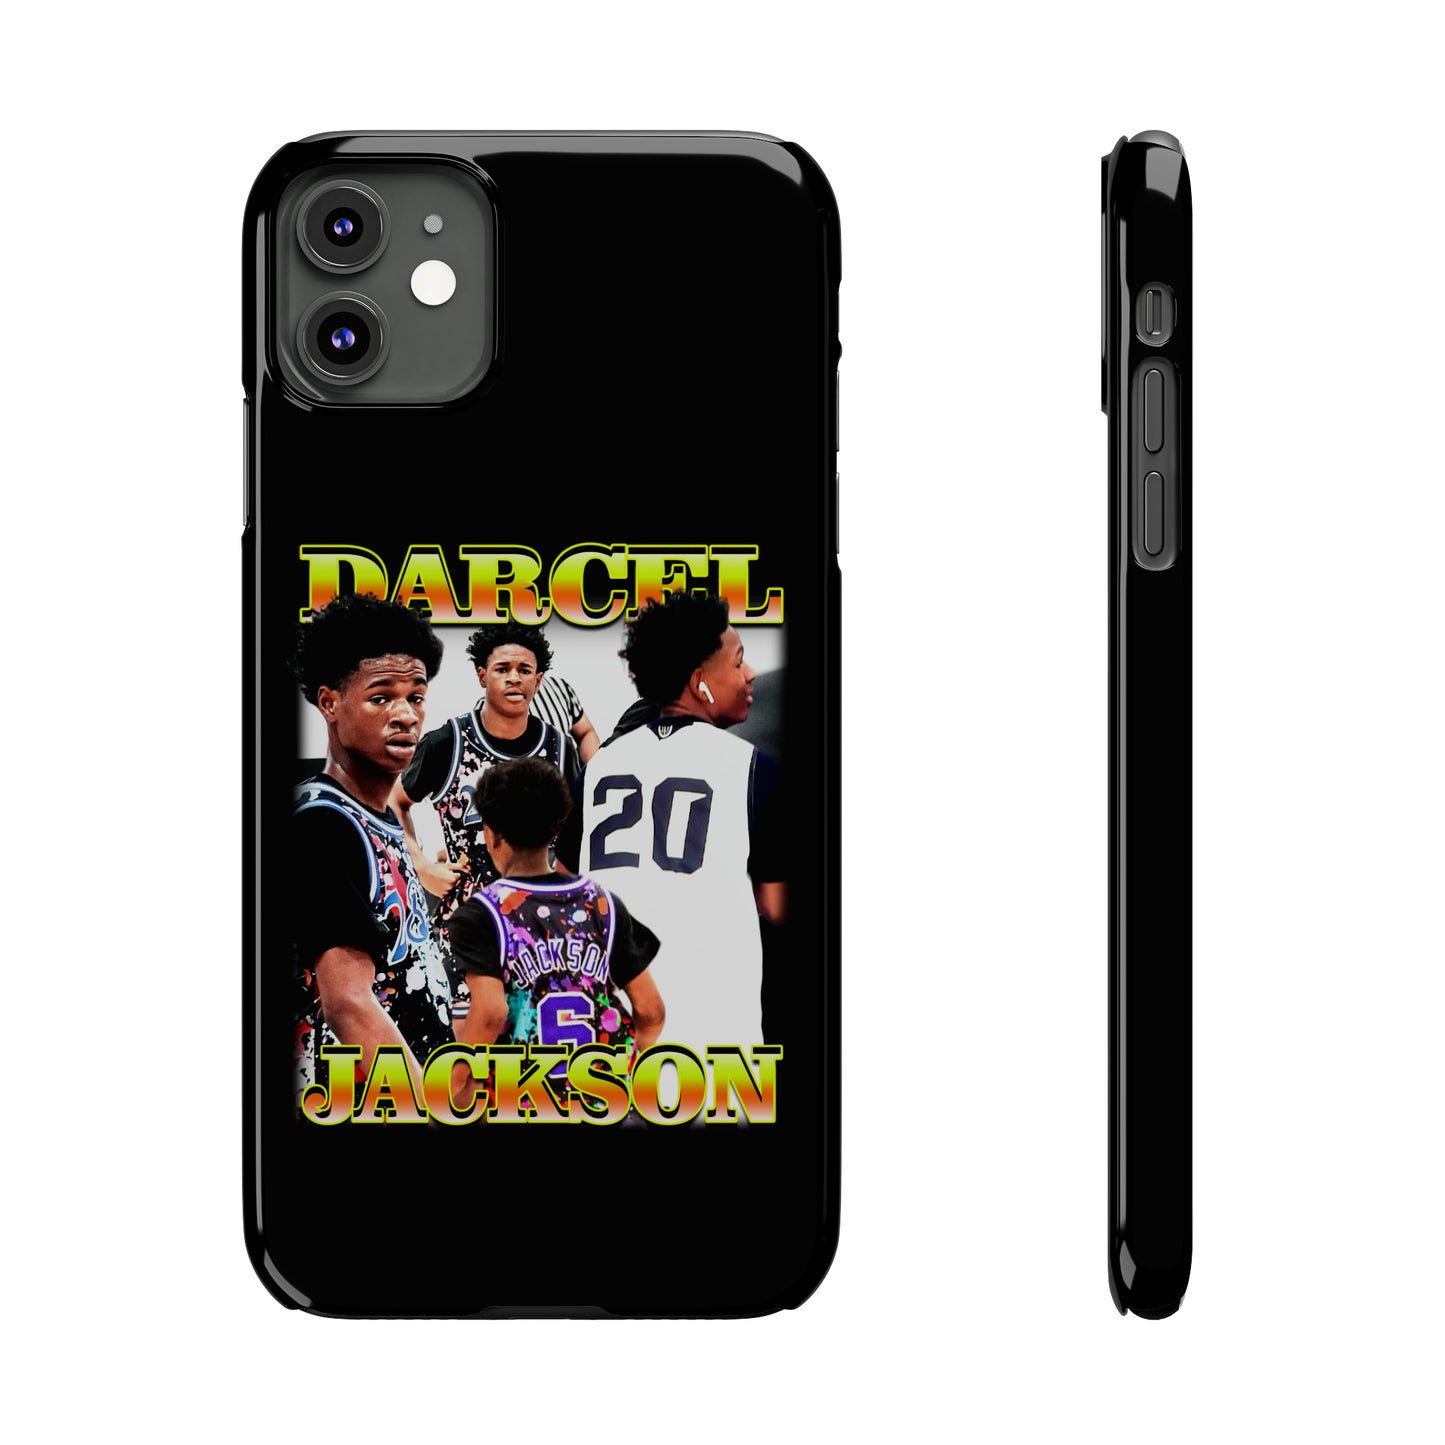 Darcel Jackson Phone Case